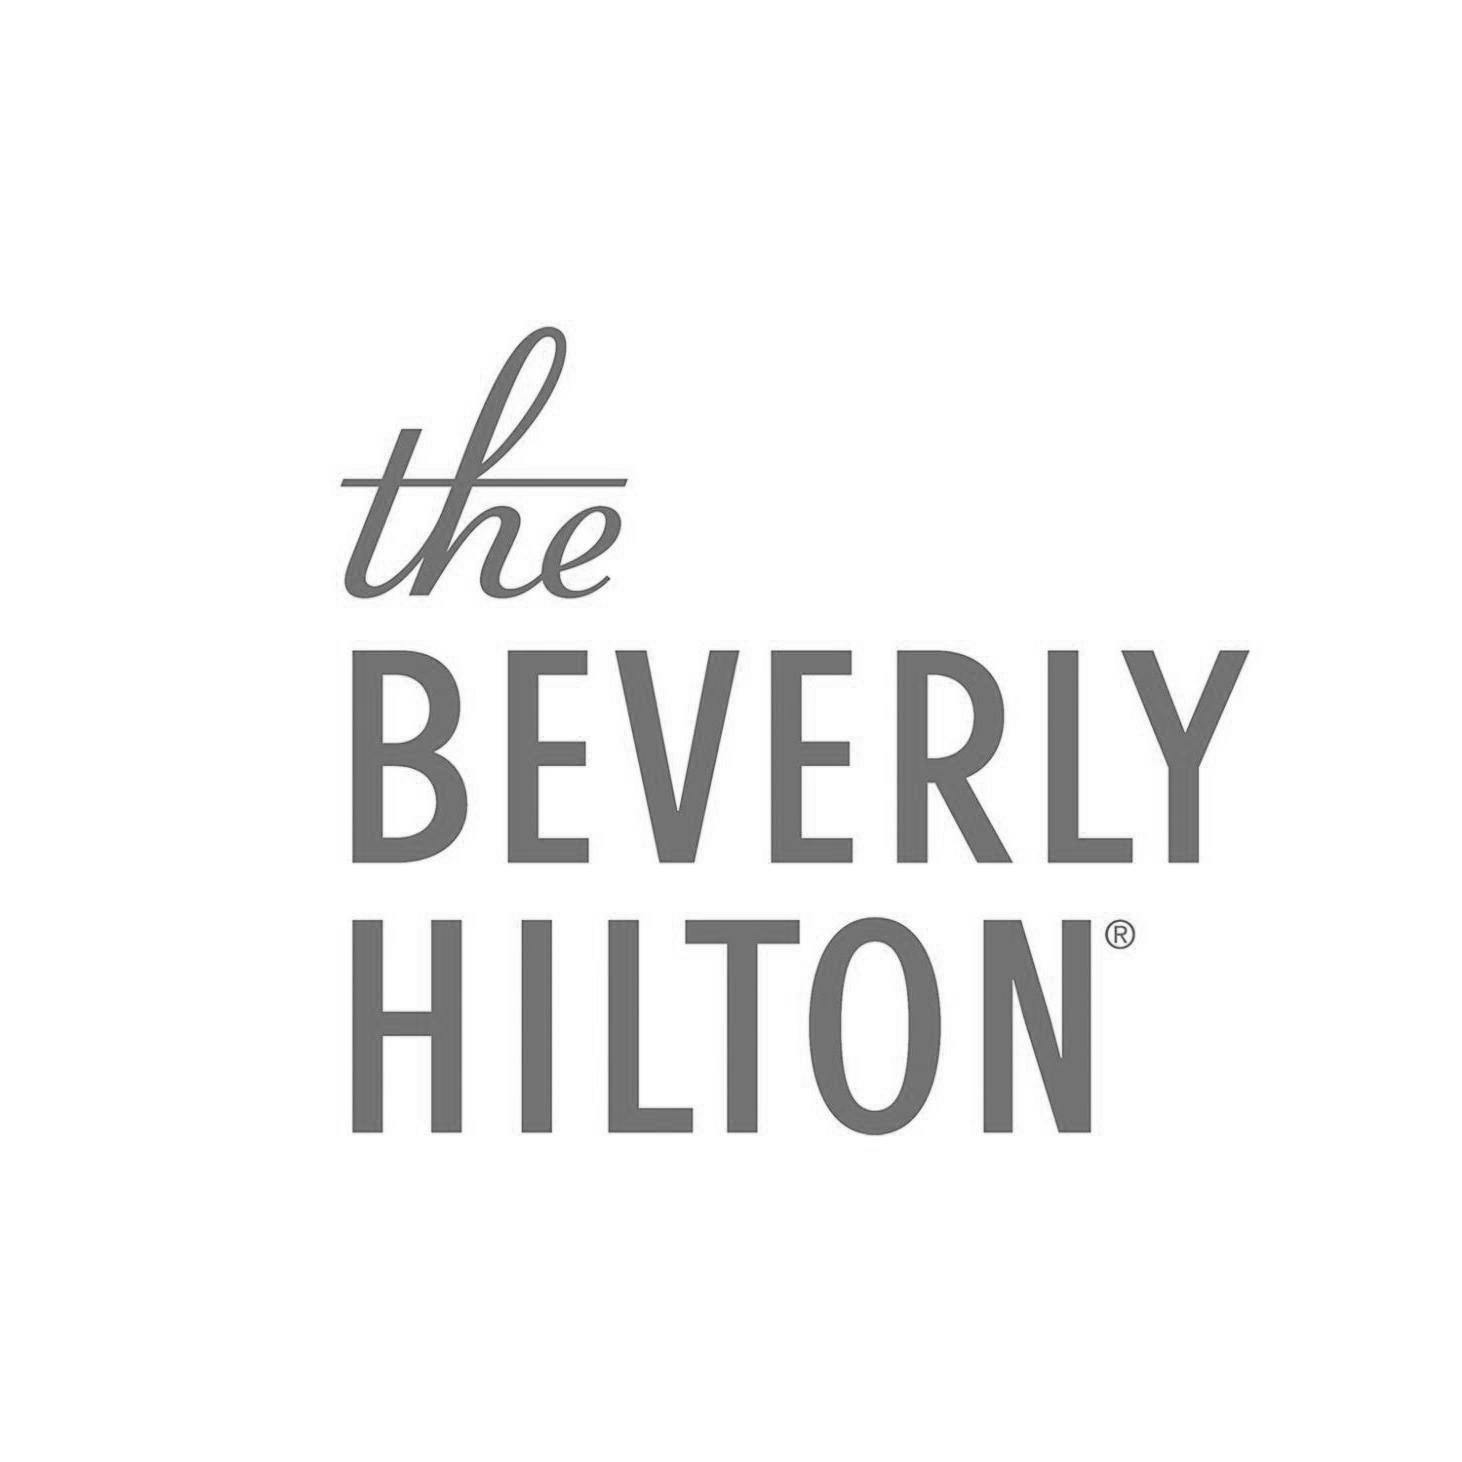 HOS - The Beverly Hills Hilton Logo 01.png